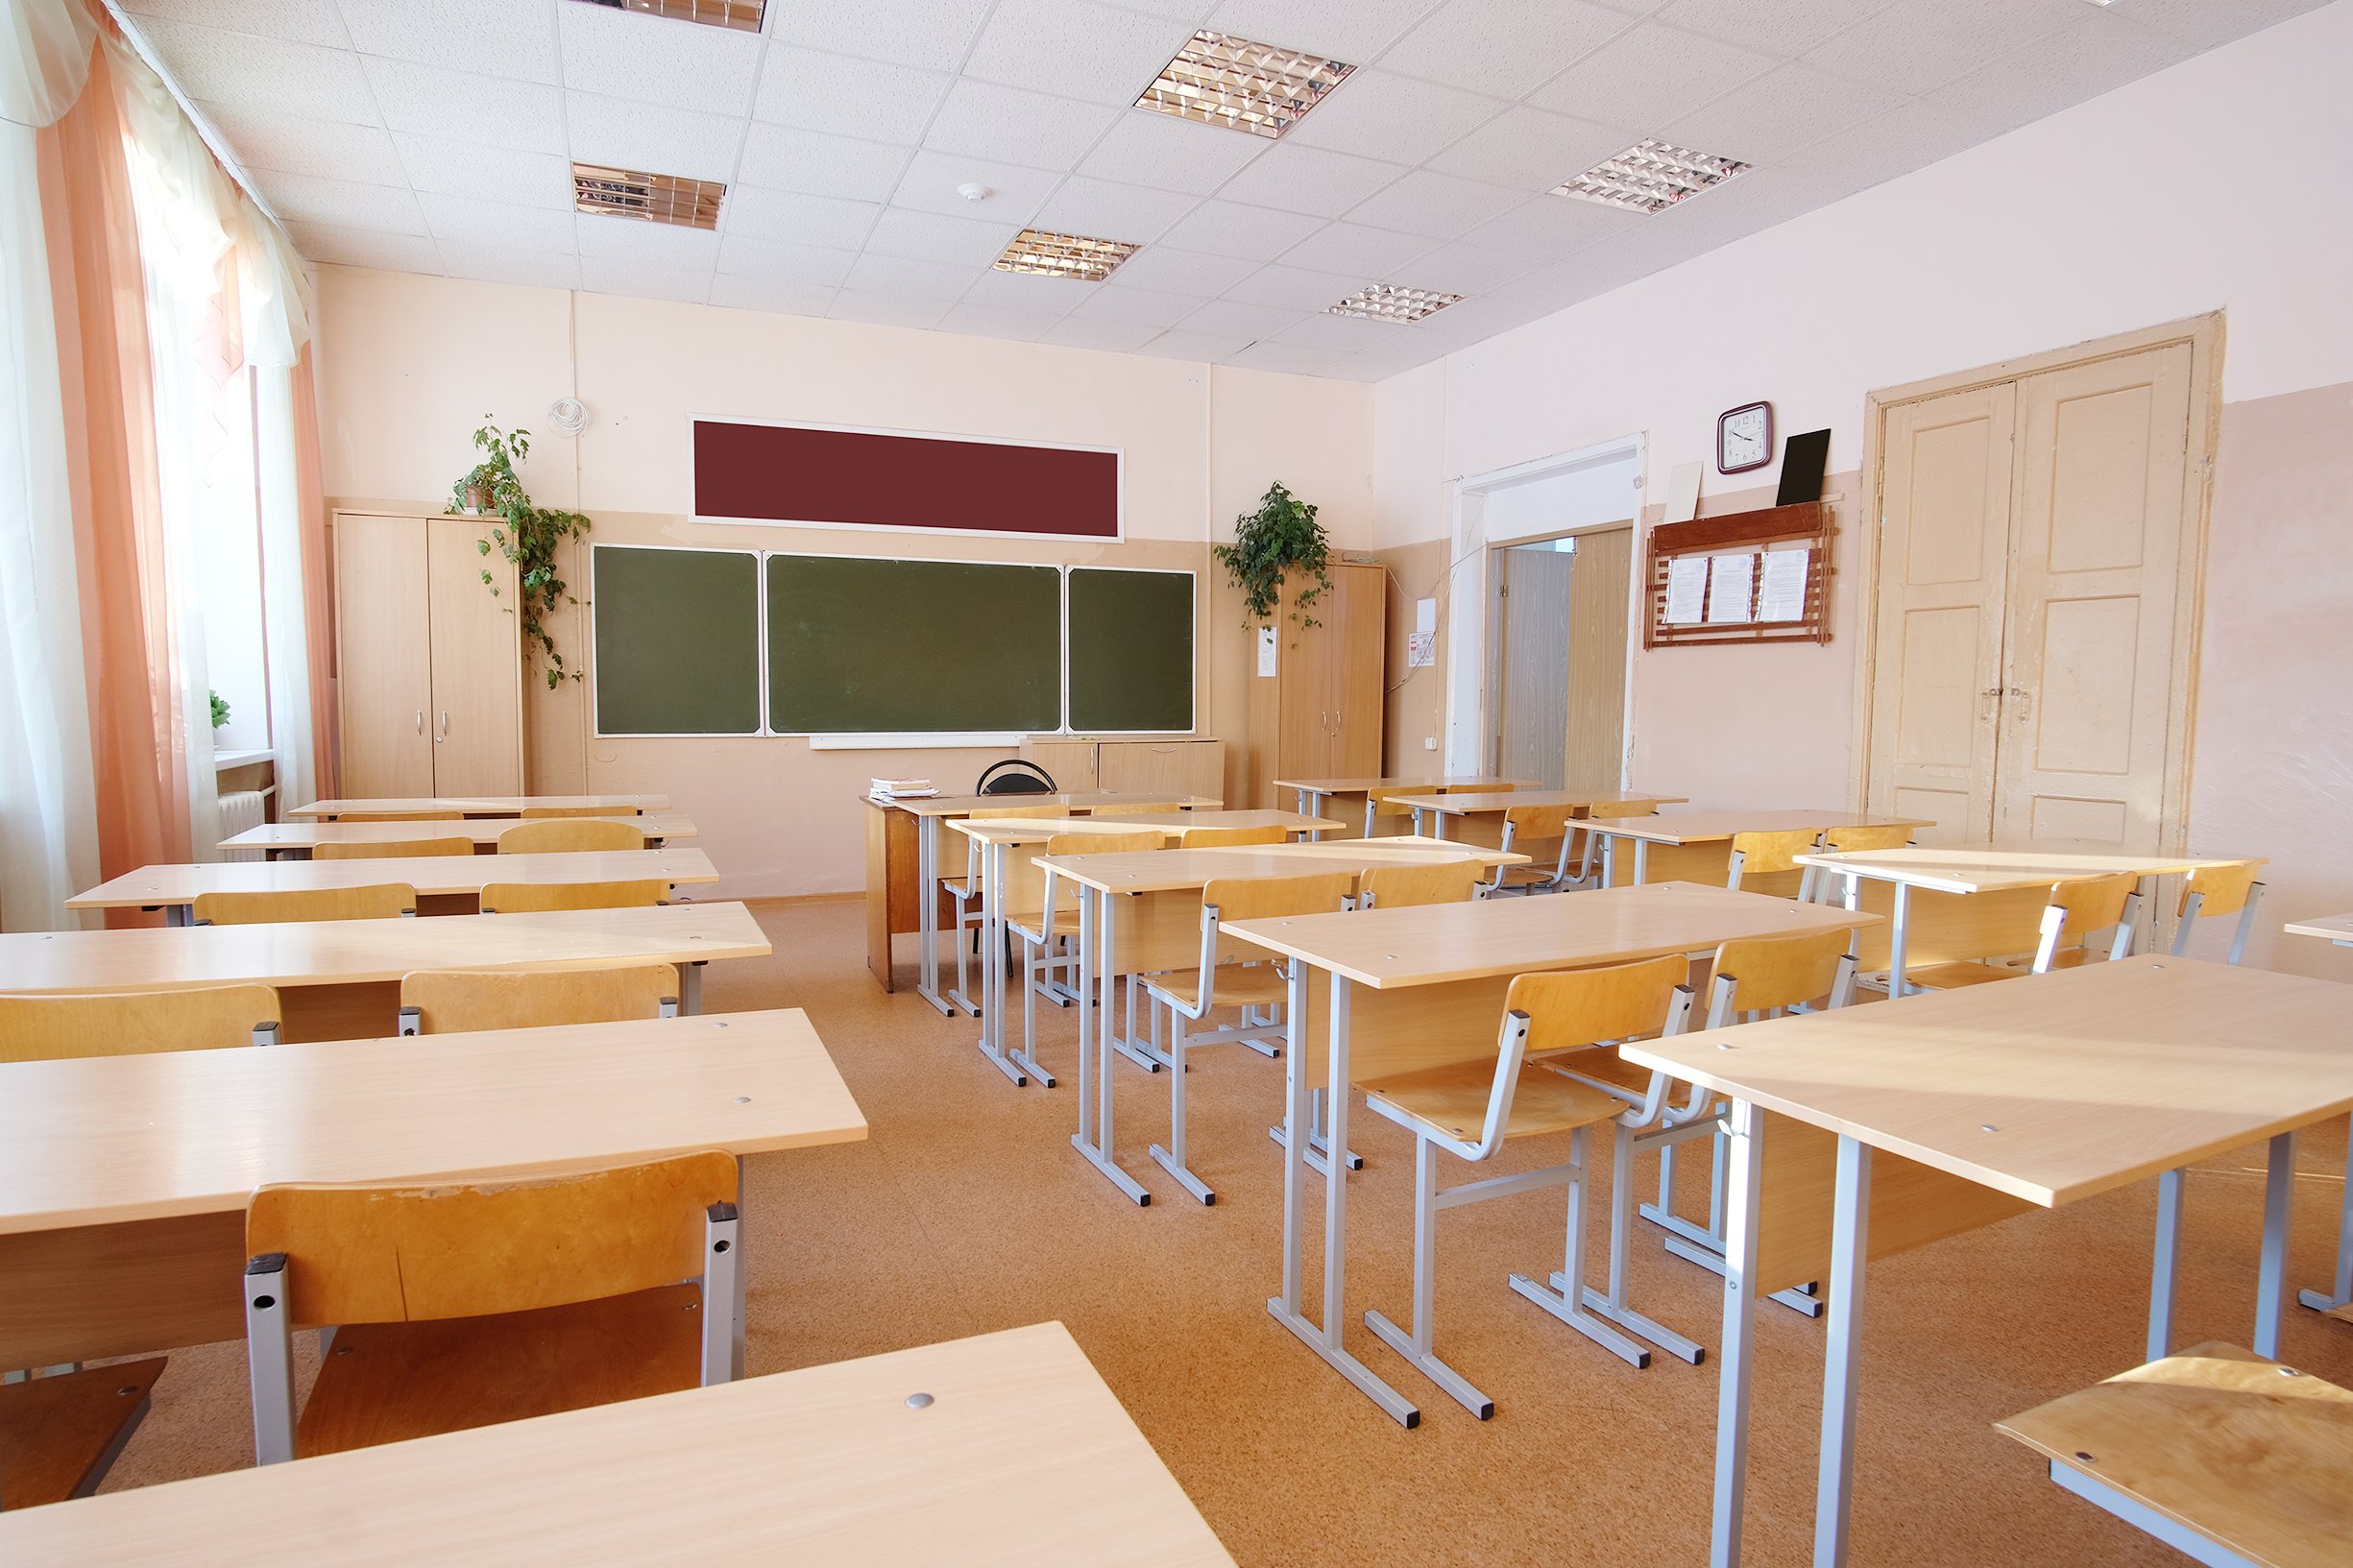 Salle de classe. | Photo : Shutterstock